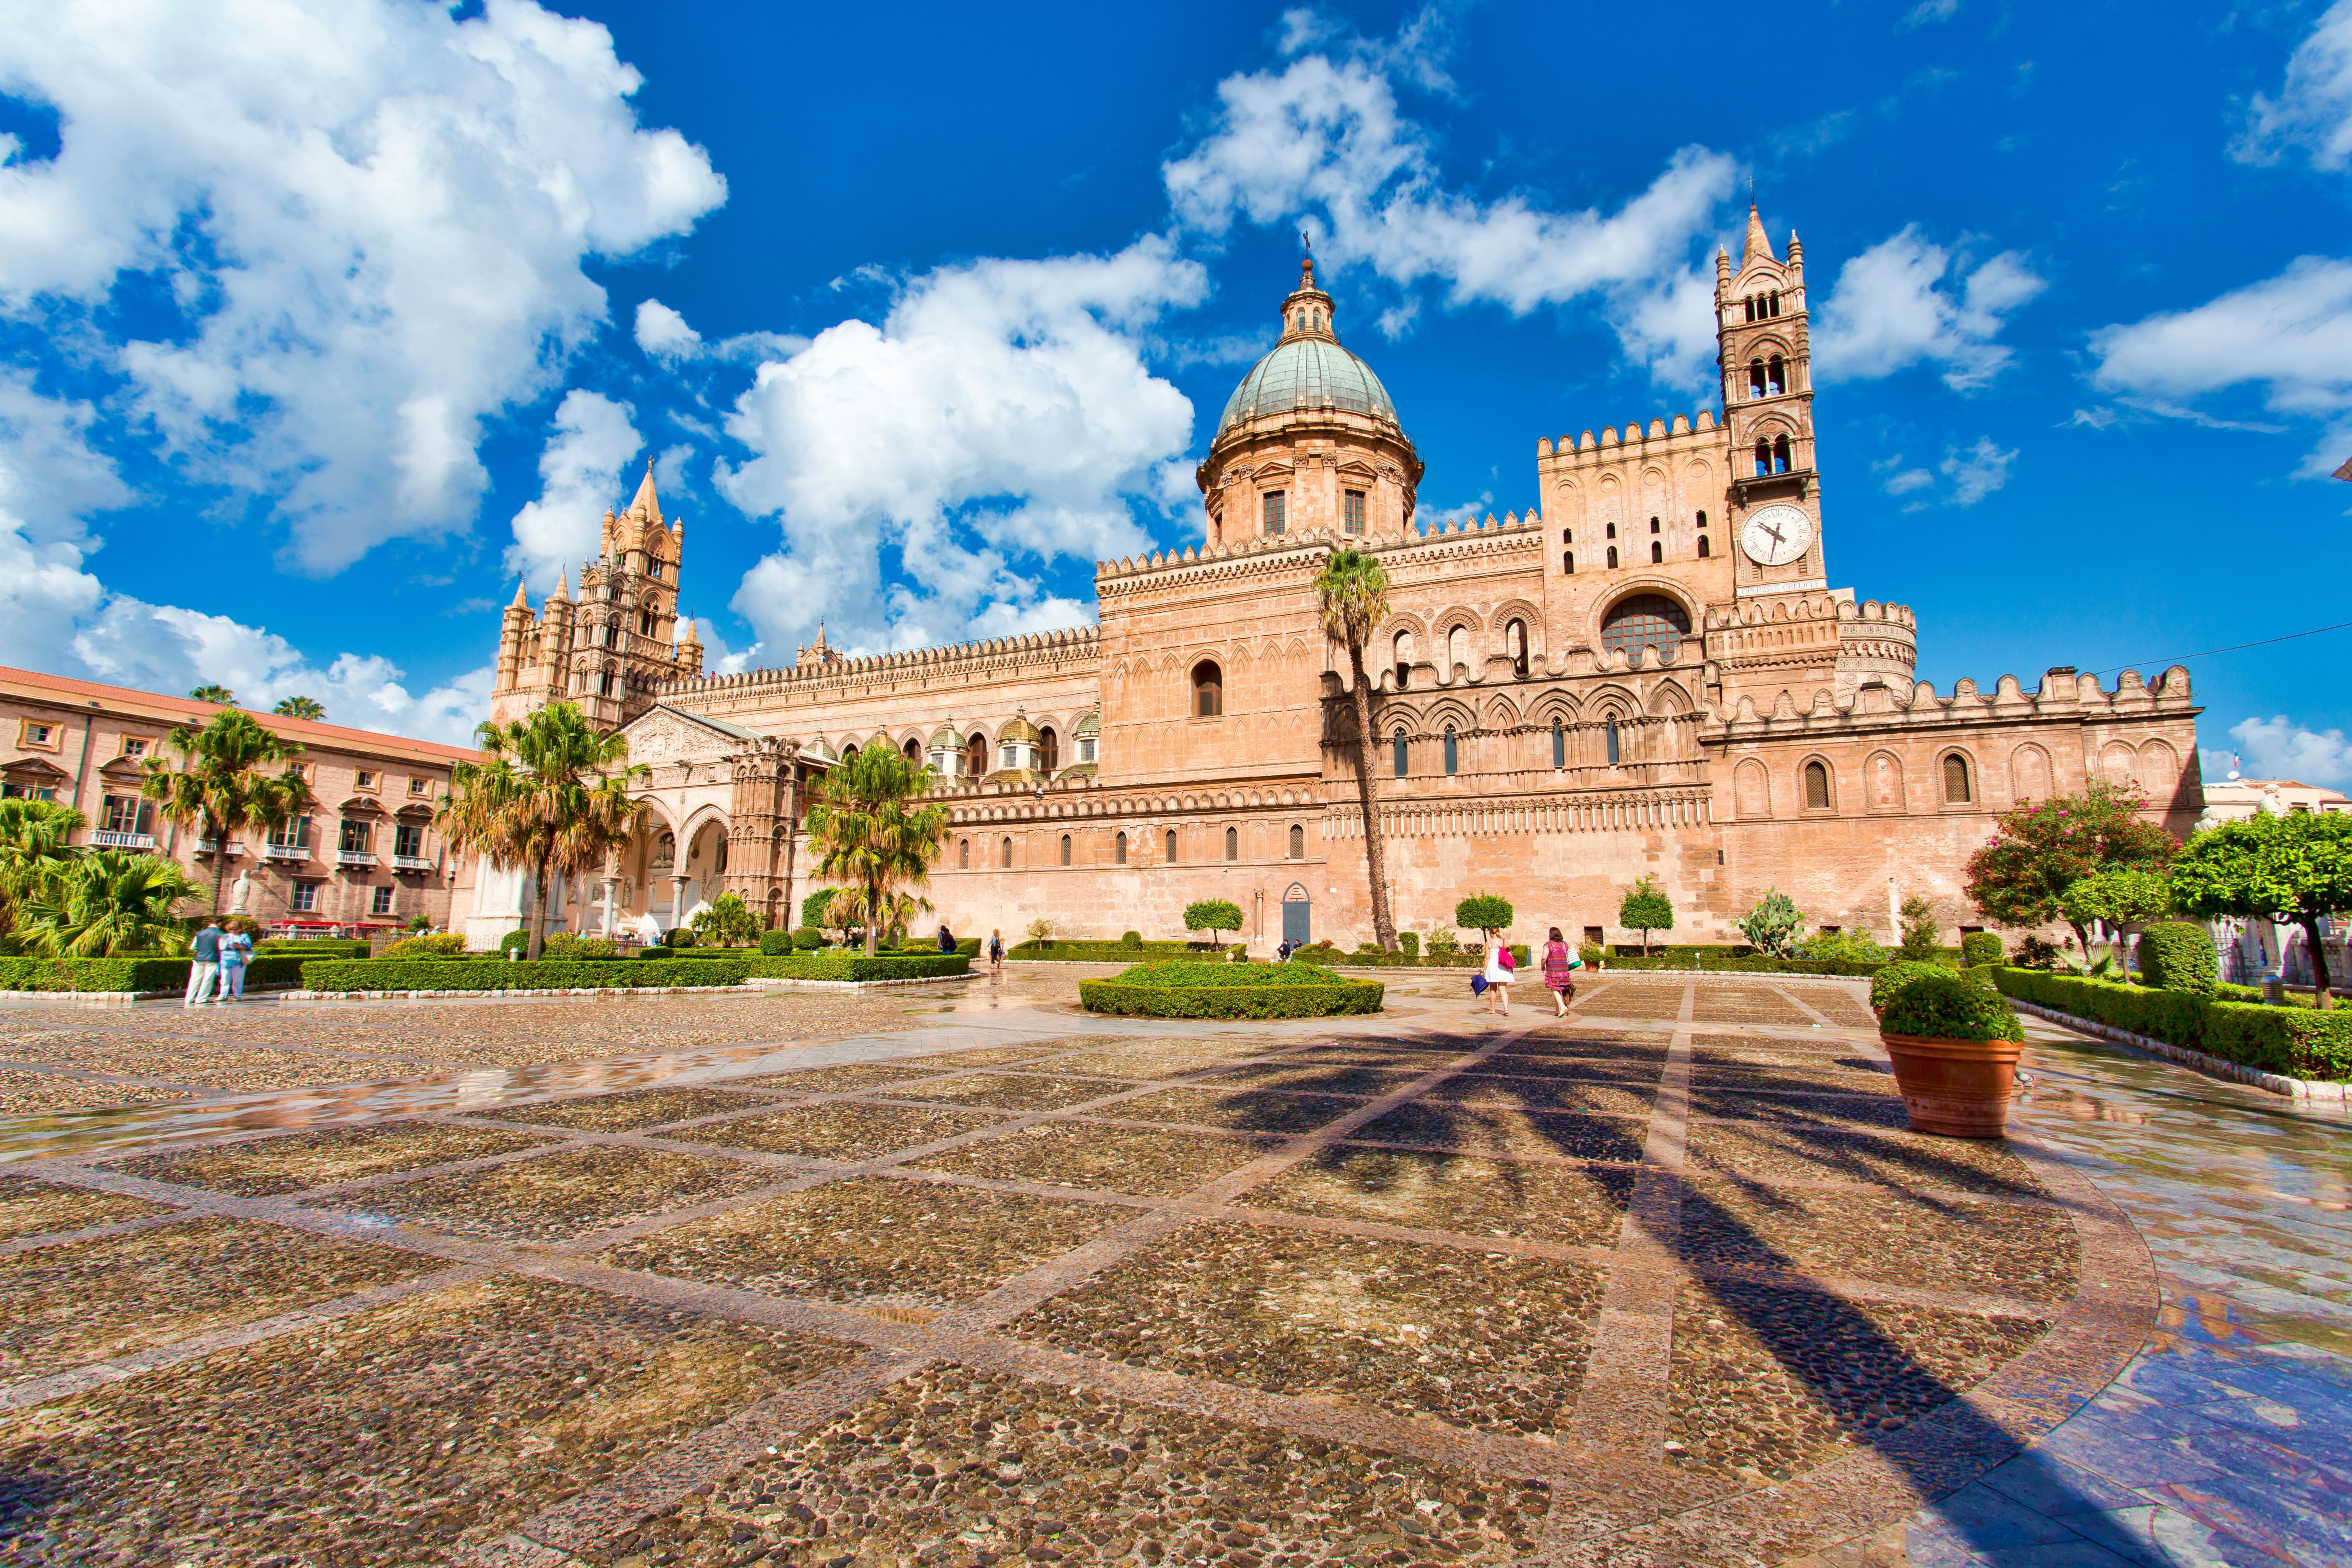 Palermo Cathedral © lapas77 - stock.adobe.com